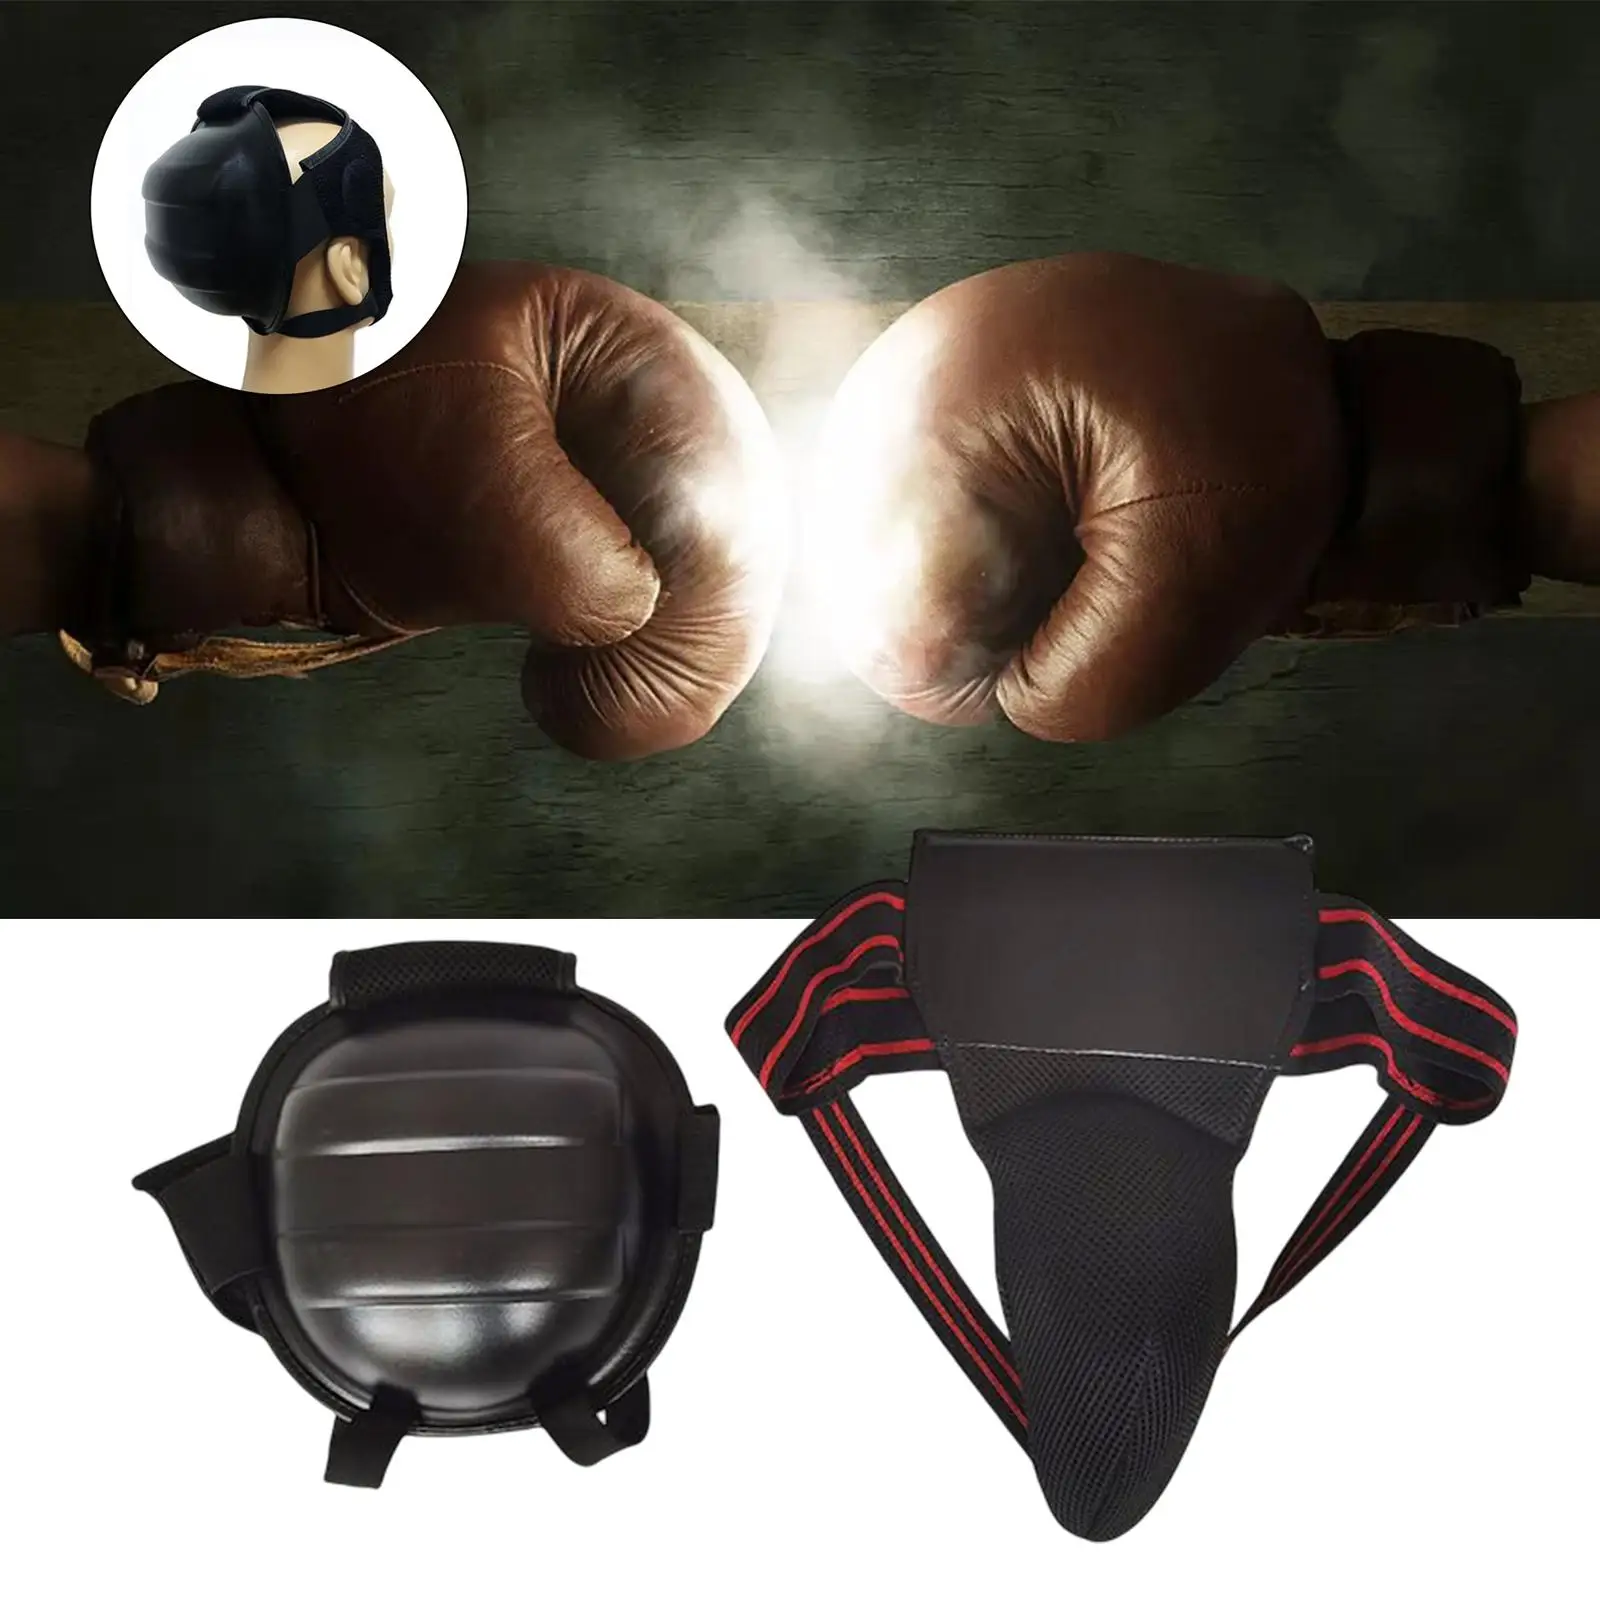 2 Pieces Taekwondo Groin Protector Kickboxing Head Gear Head Guard for Sanda Boxing Martial Arts MMA Training